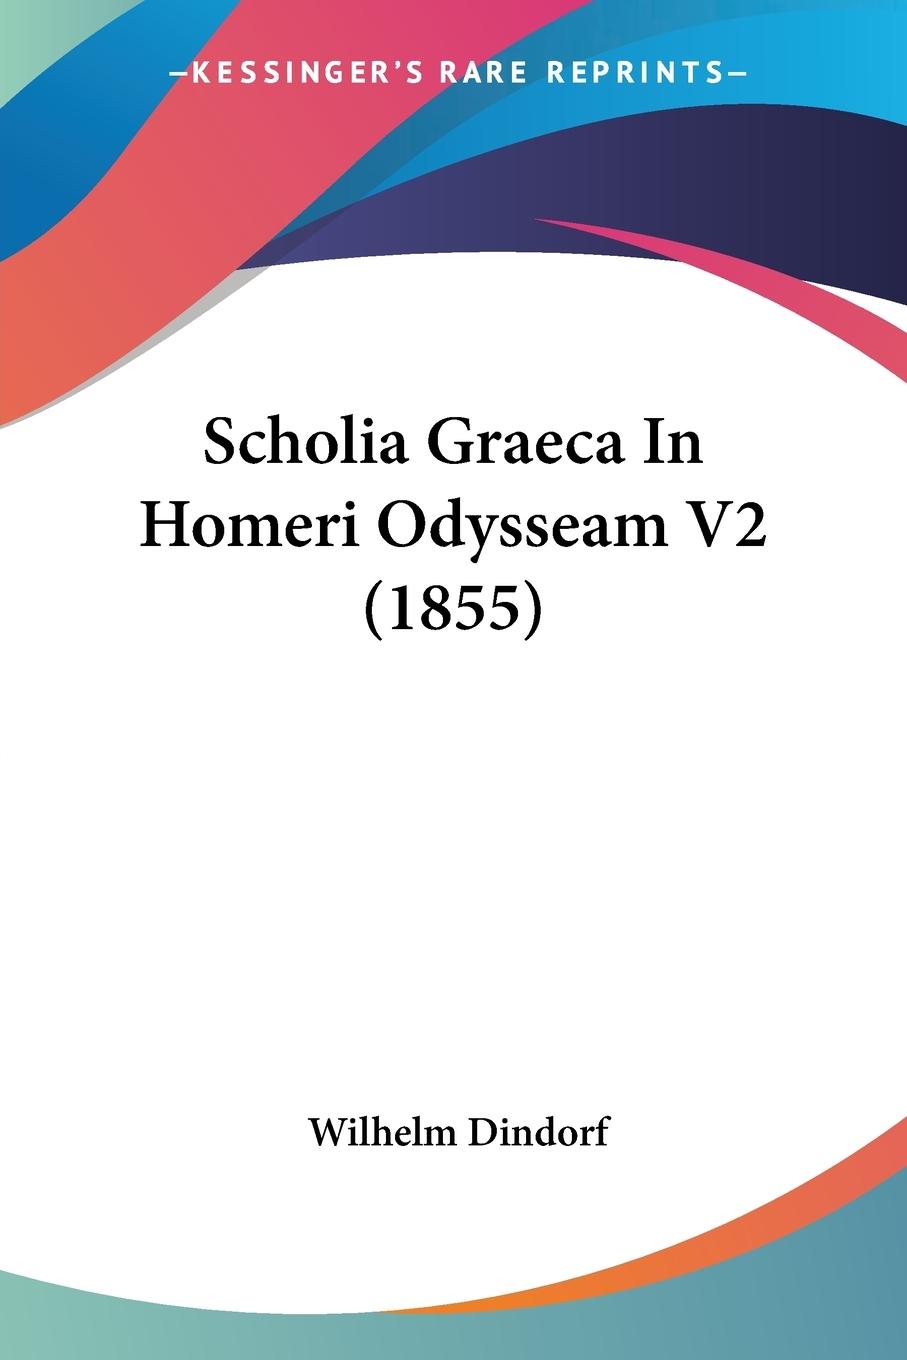 Scholia Graeca In Homeri Odysseam V2 (1855)